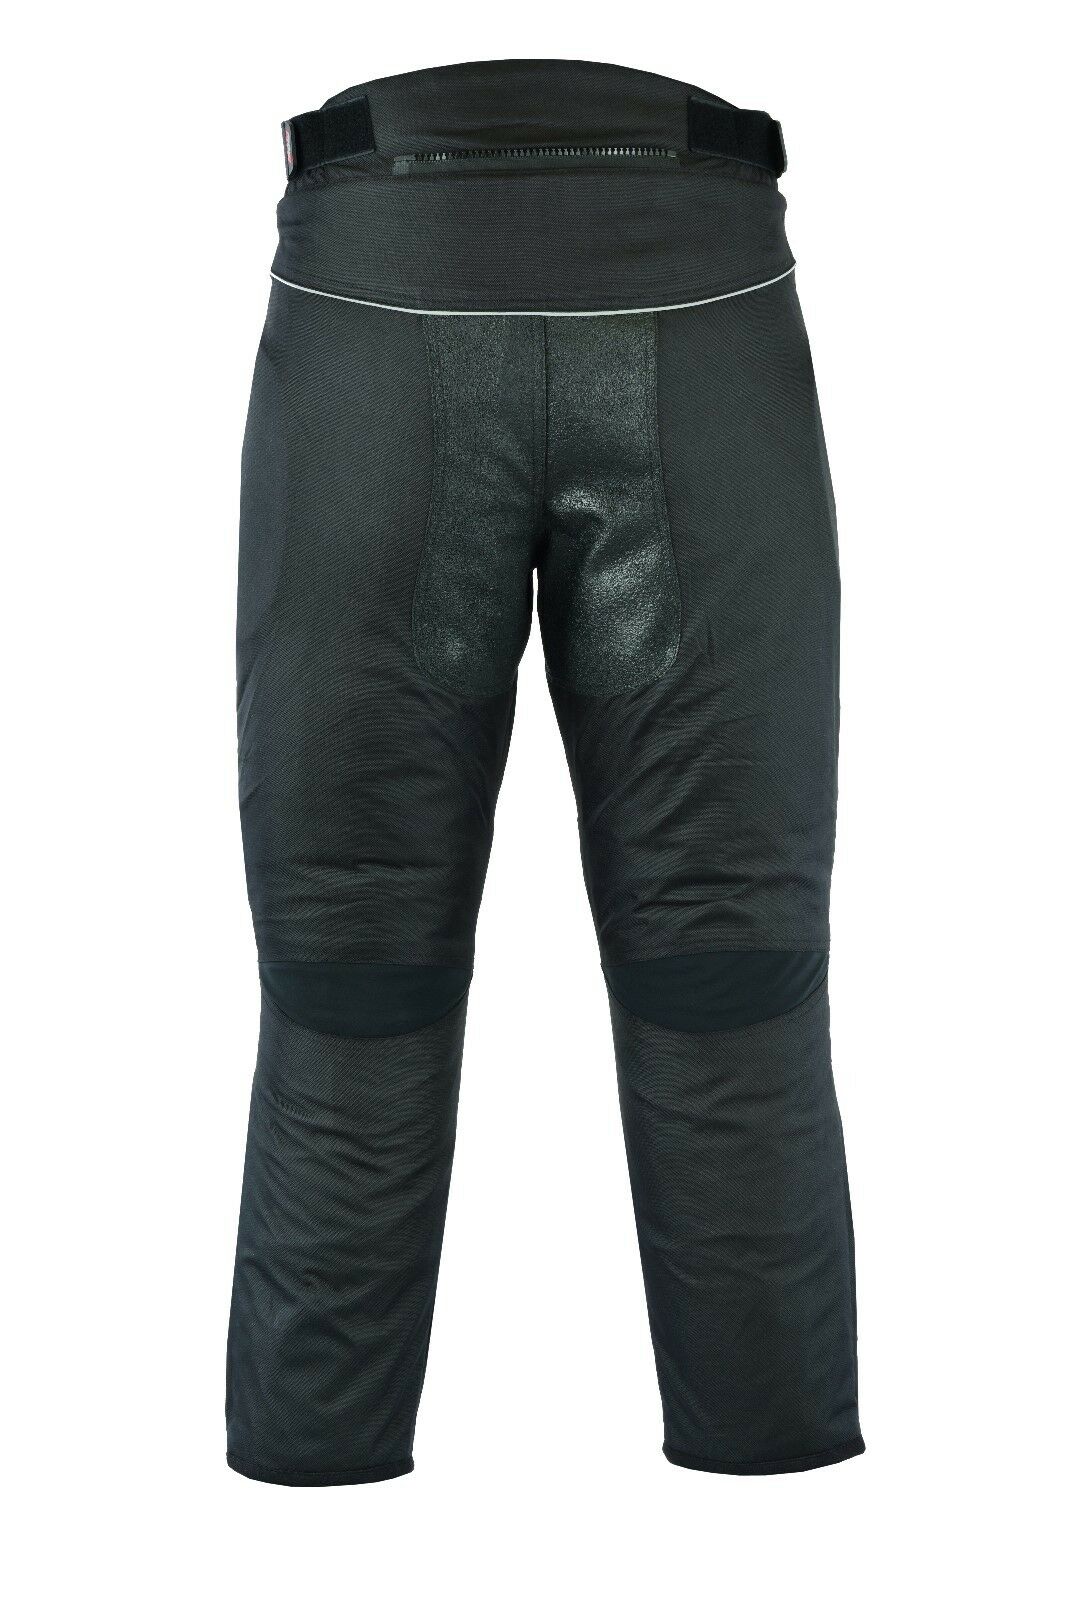 MCW Gear Motorbike Motorcycle Textile Waterproof Cordura Trousers Pants Armours - Hamtons Direct